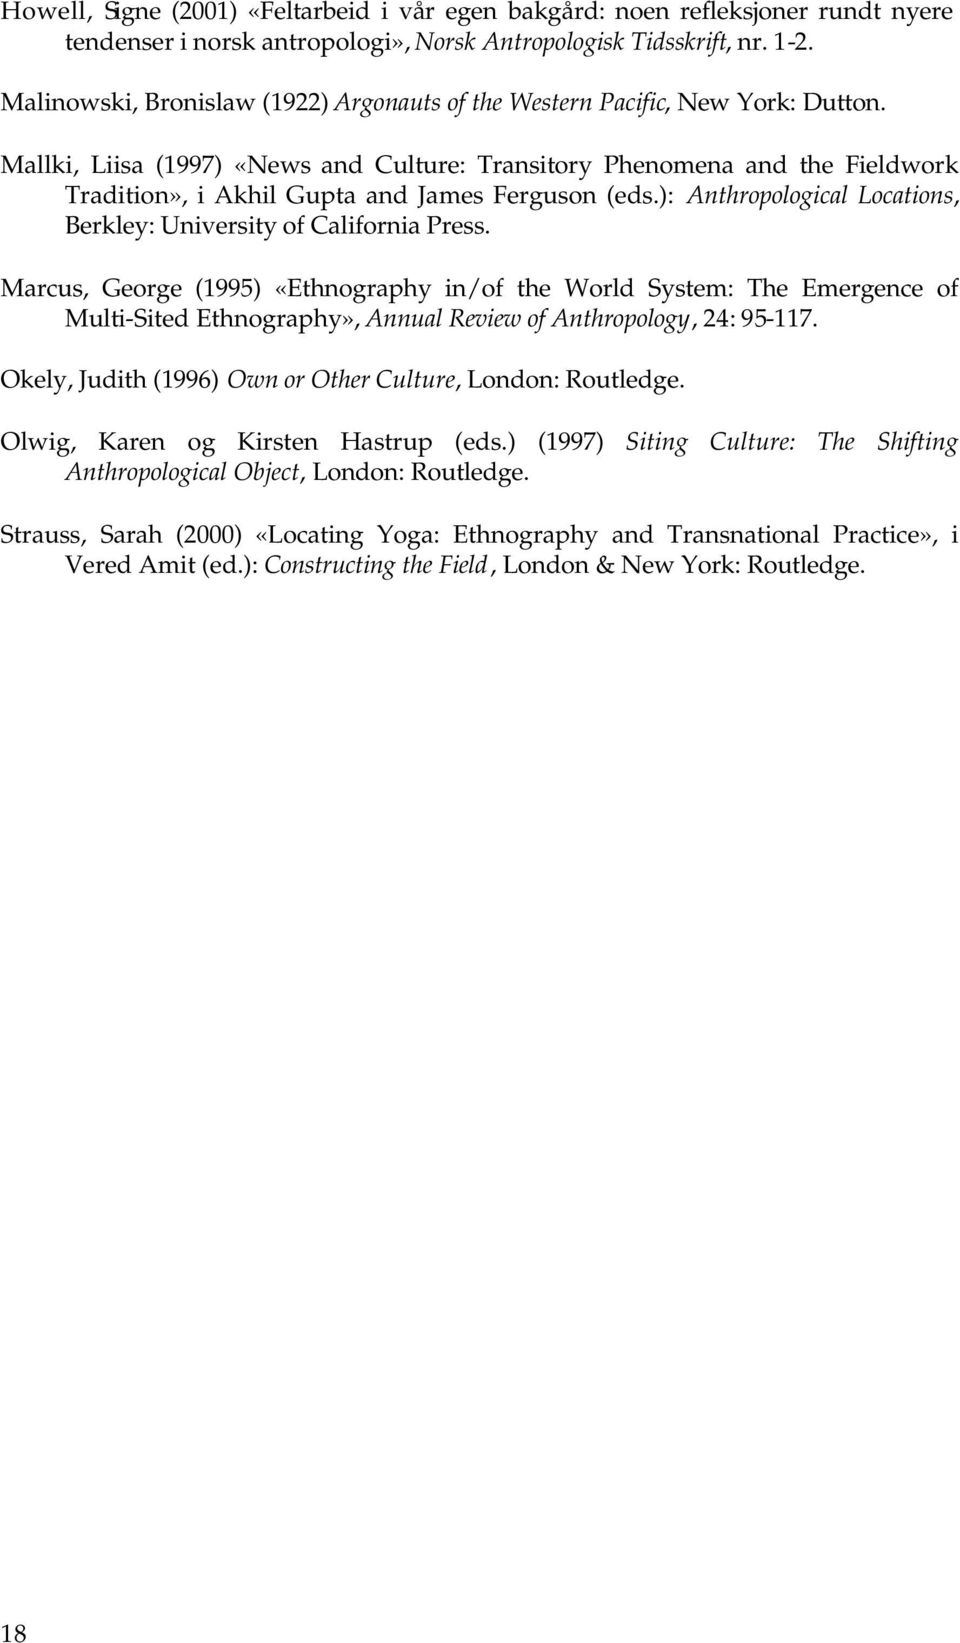 Mallki, Liisa (1997) «News and Culture: Transitory Phenomena and the Fieldwork Tradition», i Akhil Gupta and James Ferguson (eds.): Anthropological Locations, Berkley: University of California Press.